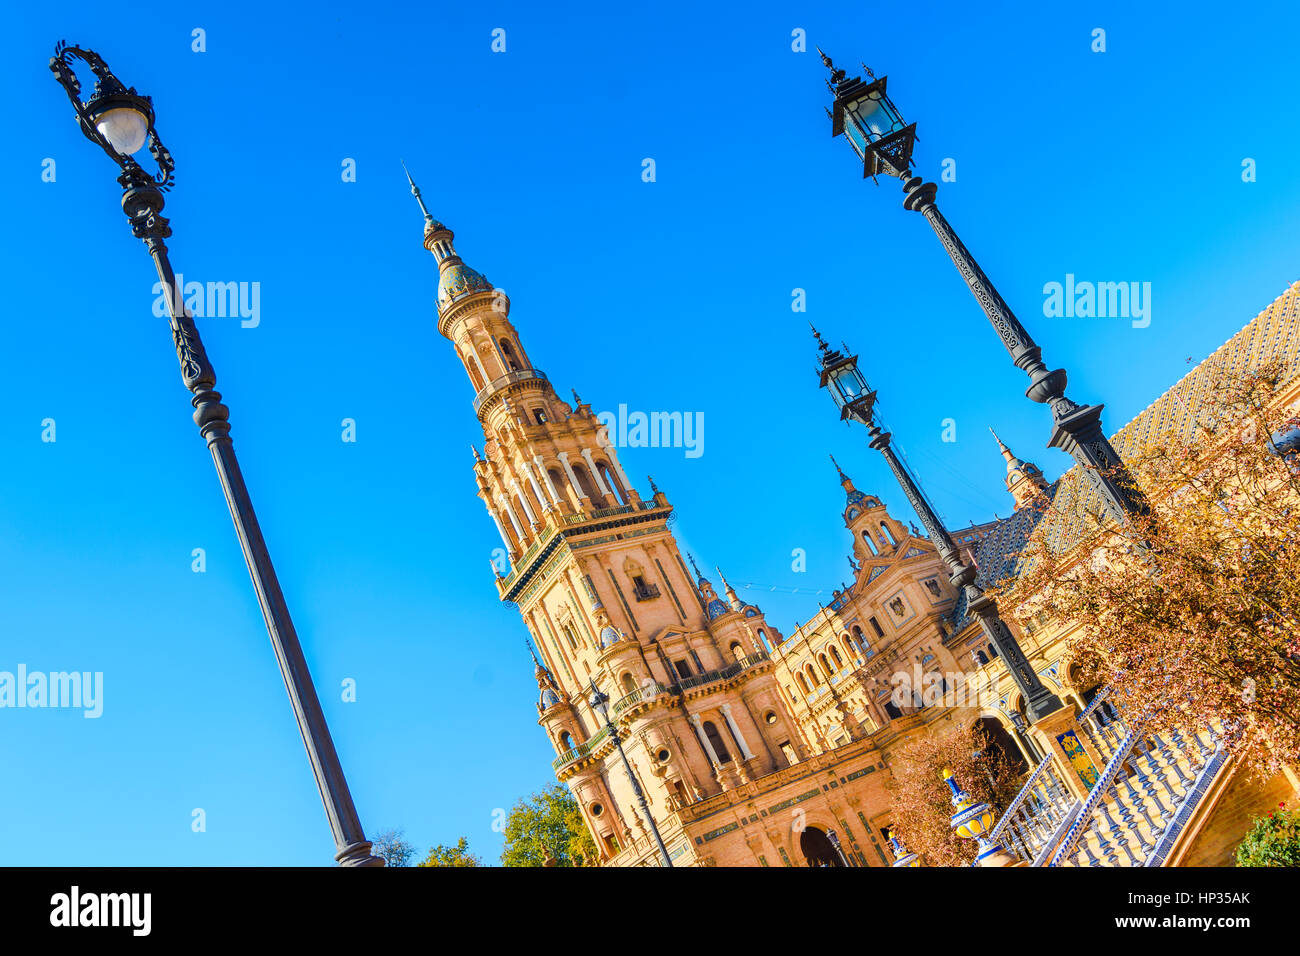 Plaza de espana-Spain square-Seville, Andalusia, Spain, Europe. Traditional bridge detail Stock Photo